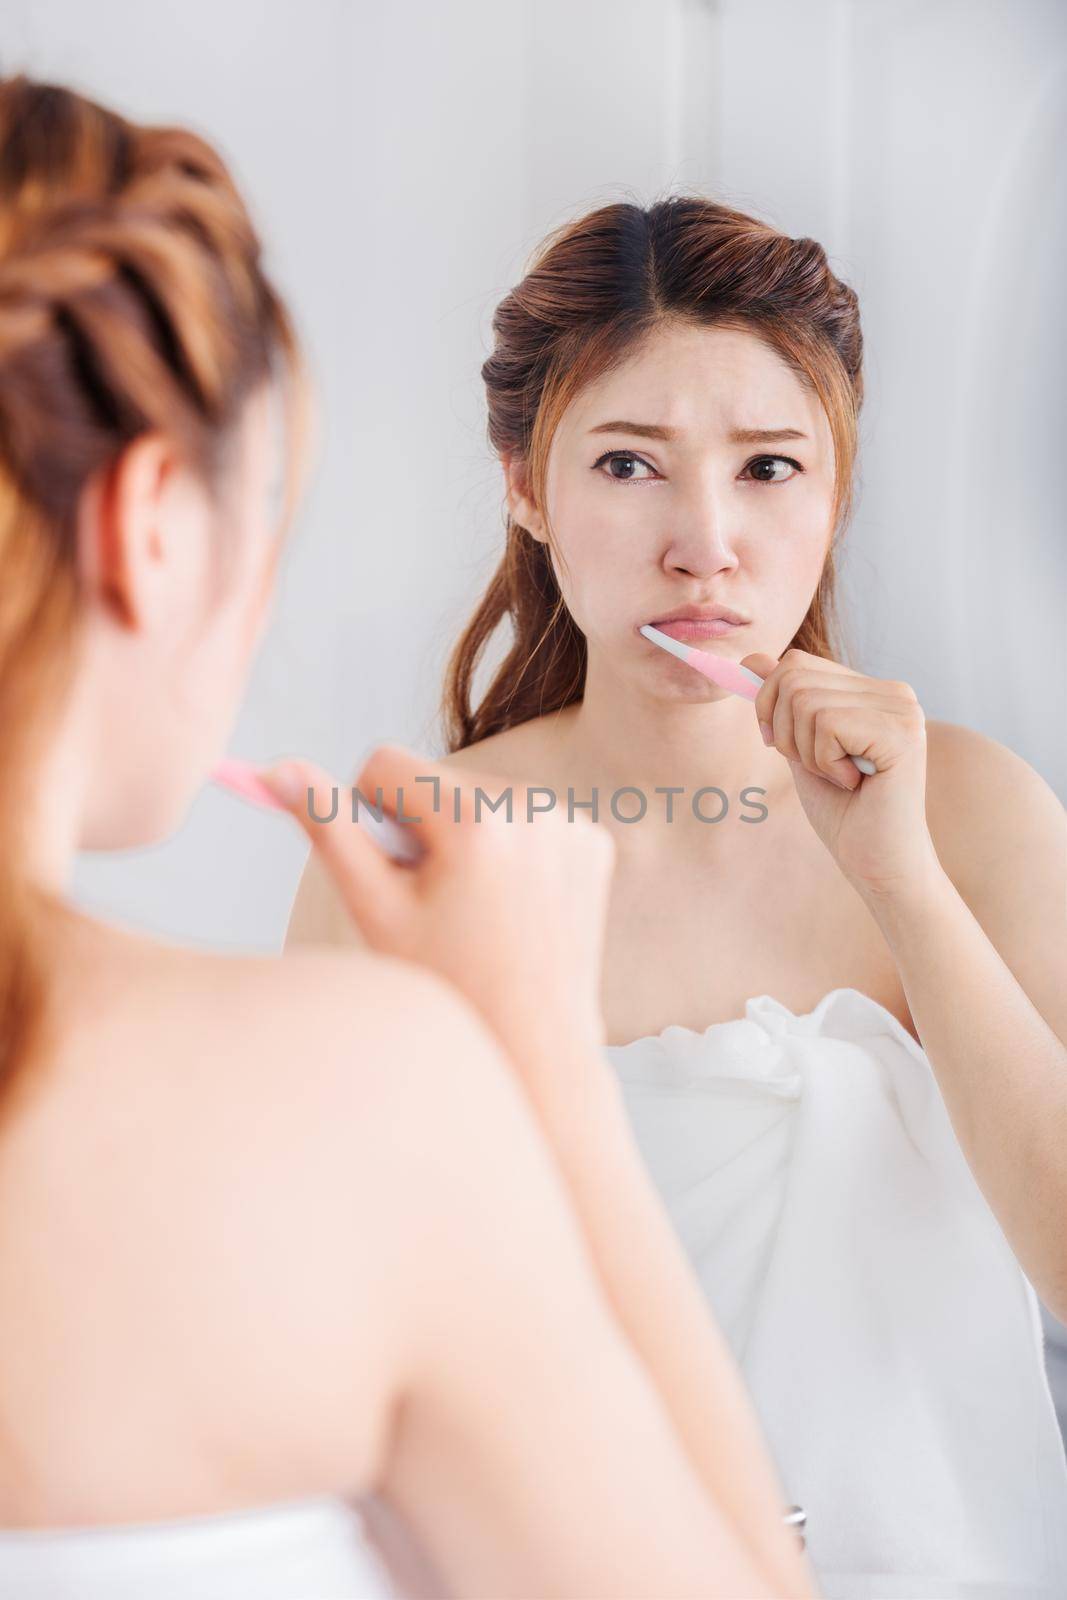 unhappy woman in bath towel brushing teeth with mirror in the bathroom